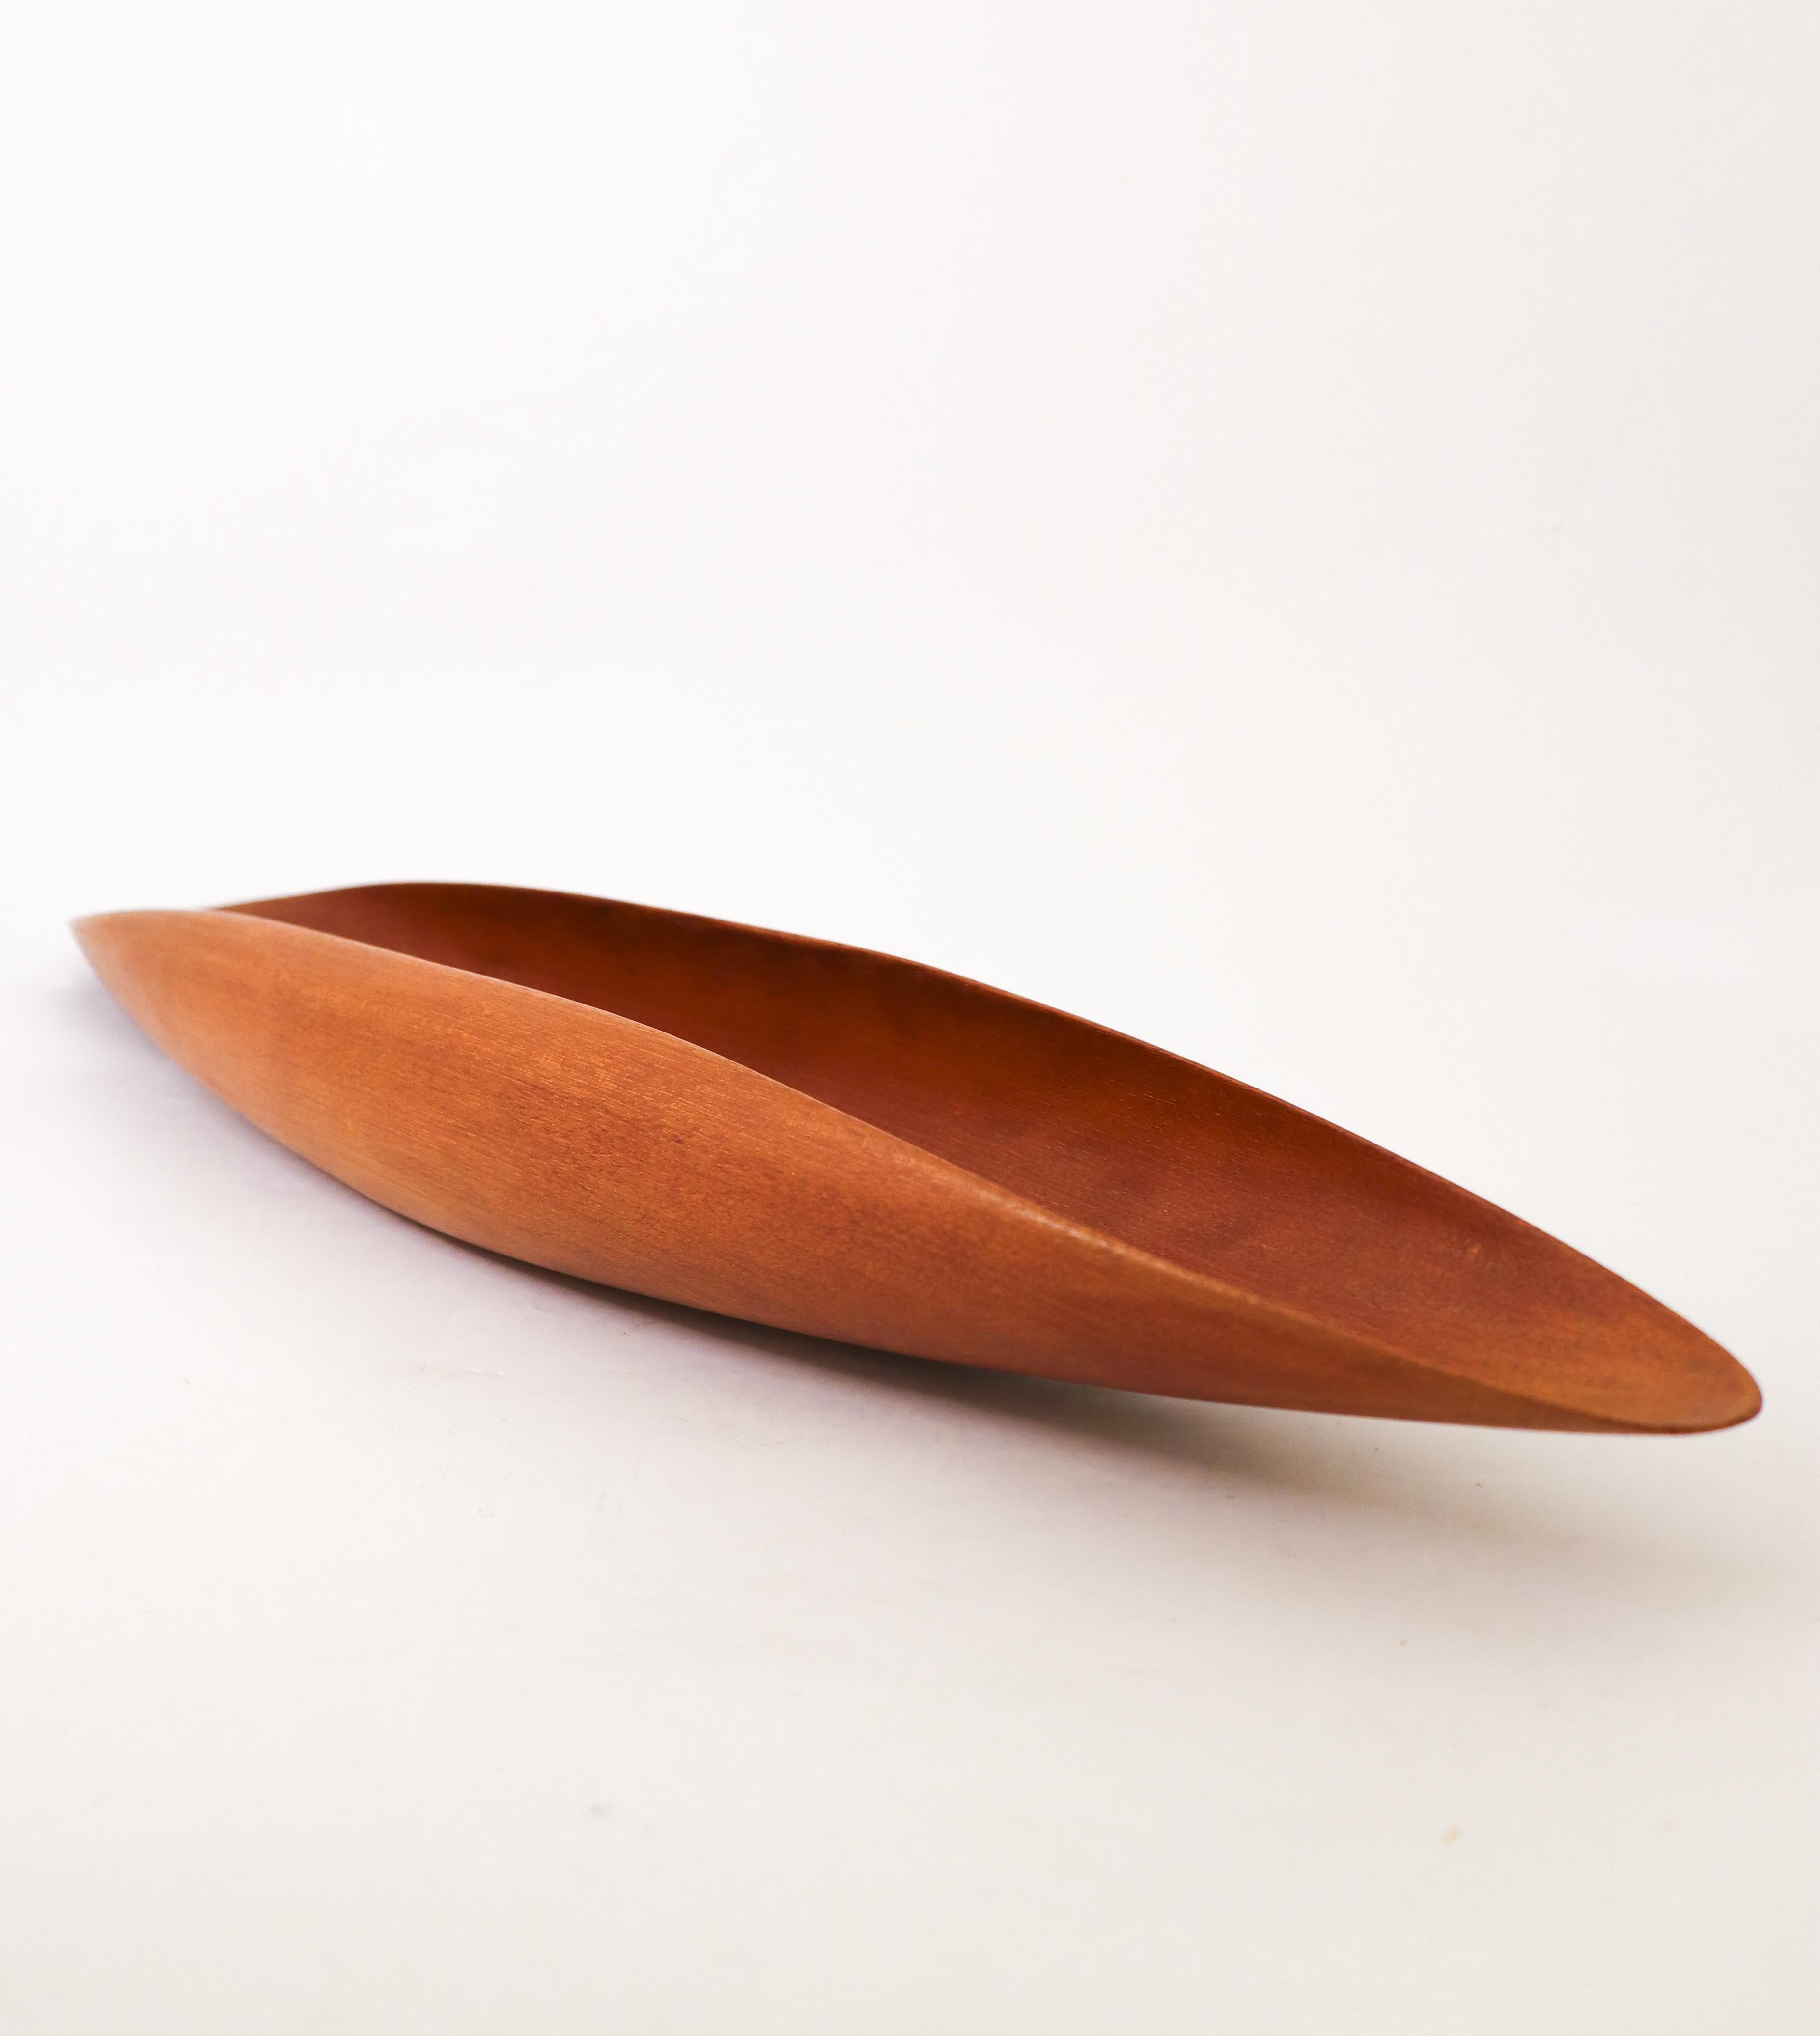 Large Wooden Teak Bowl - Johnny Mattsson - Swedish sculptor - Midcentury Modern In Good Condition For Sale In Stockholm, SE